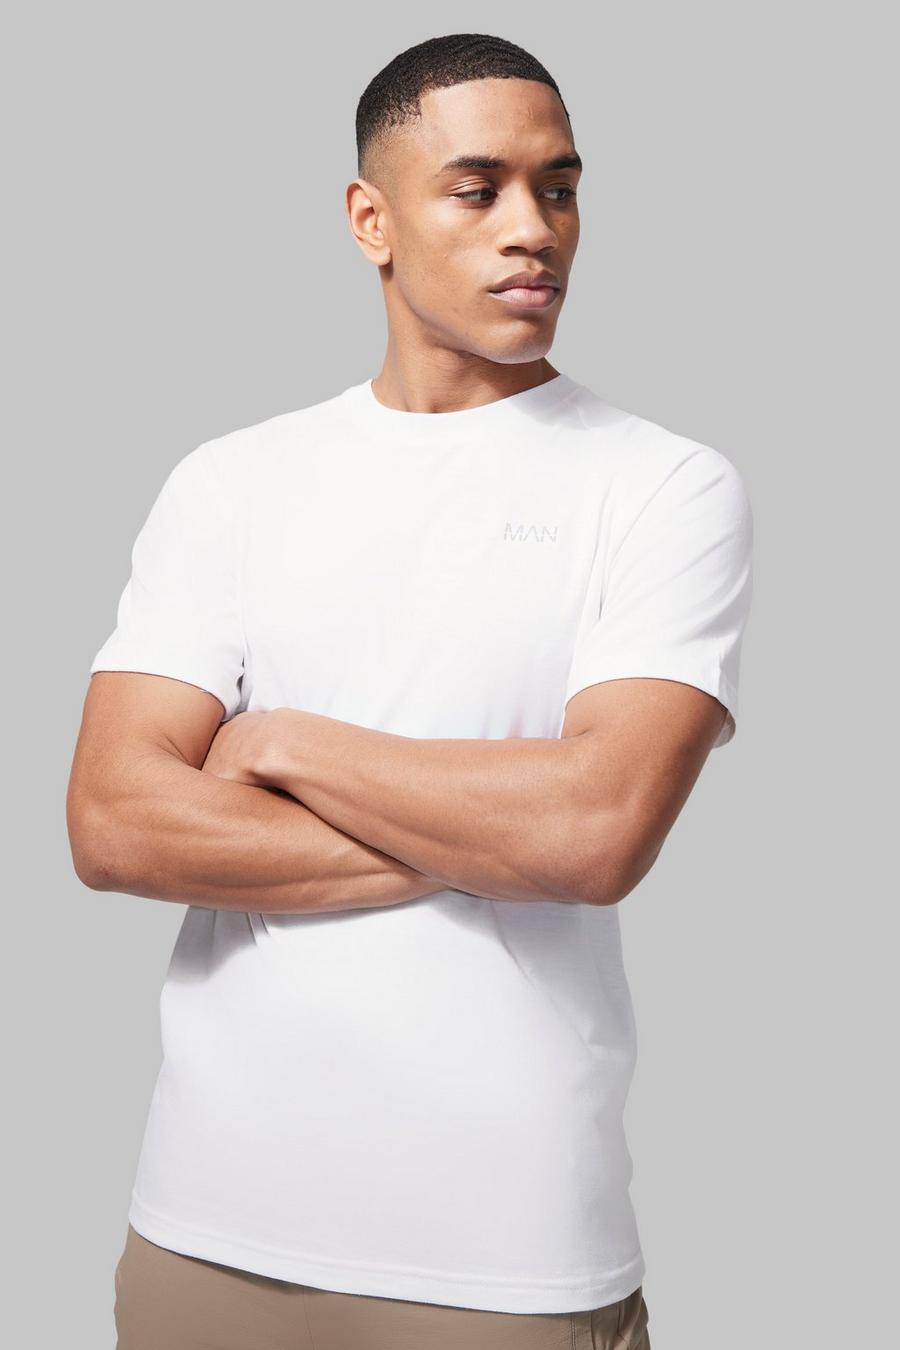 White Man Active Raglan Fitness T-Shirt